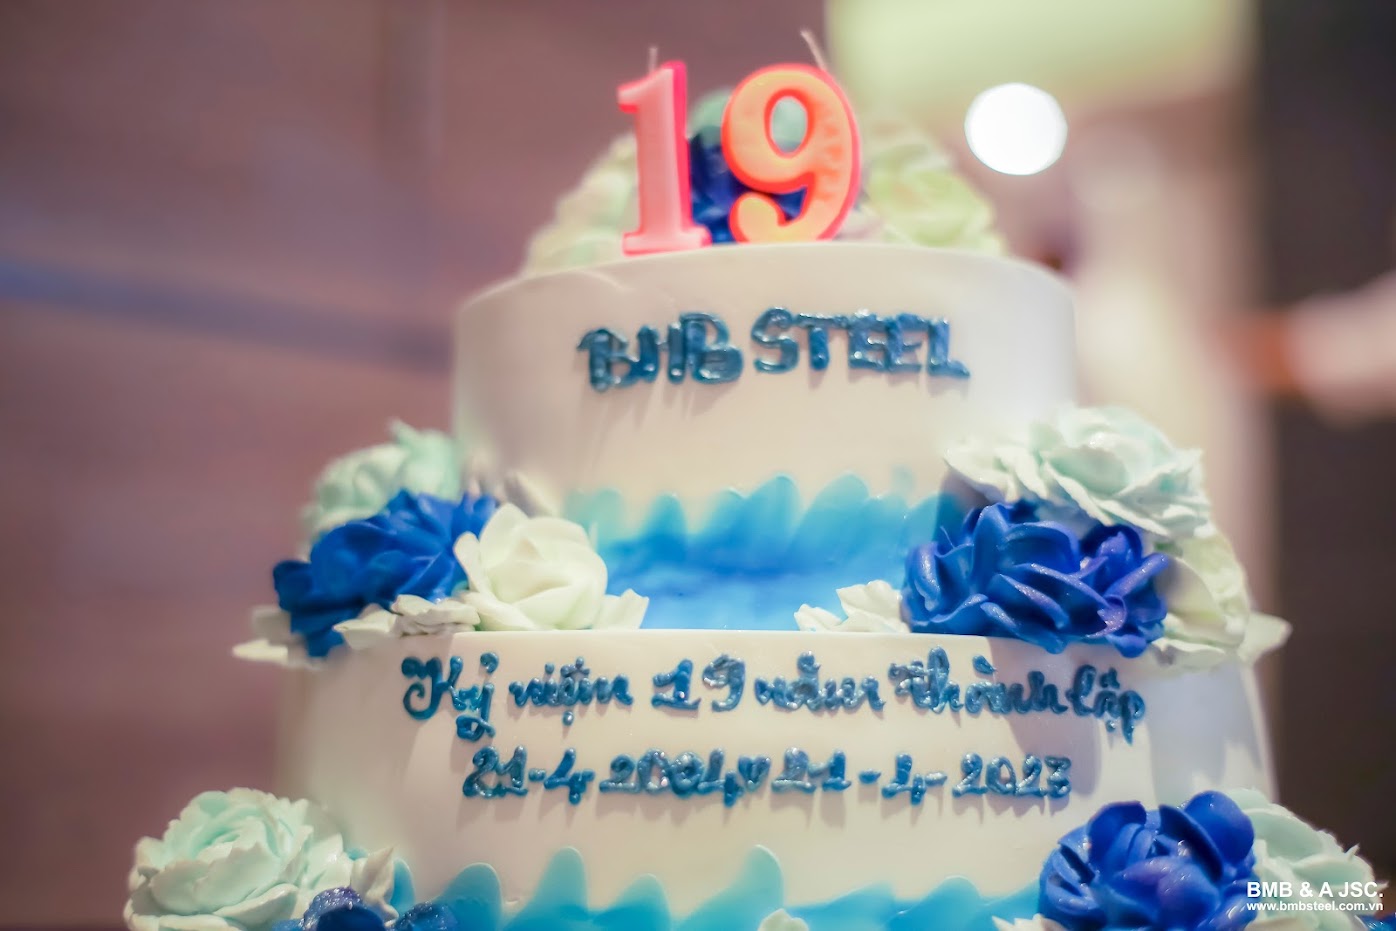 Happy 19th birthday to BMB Steel